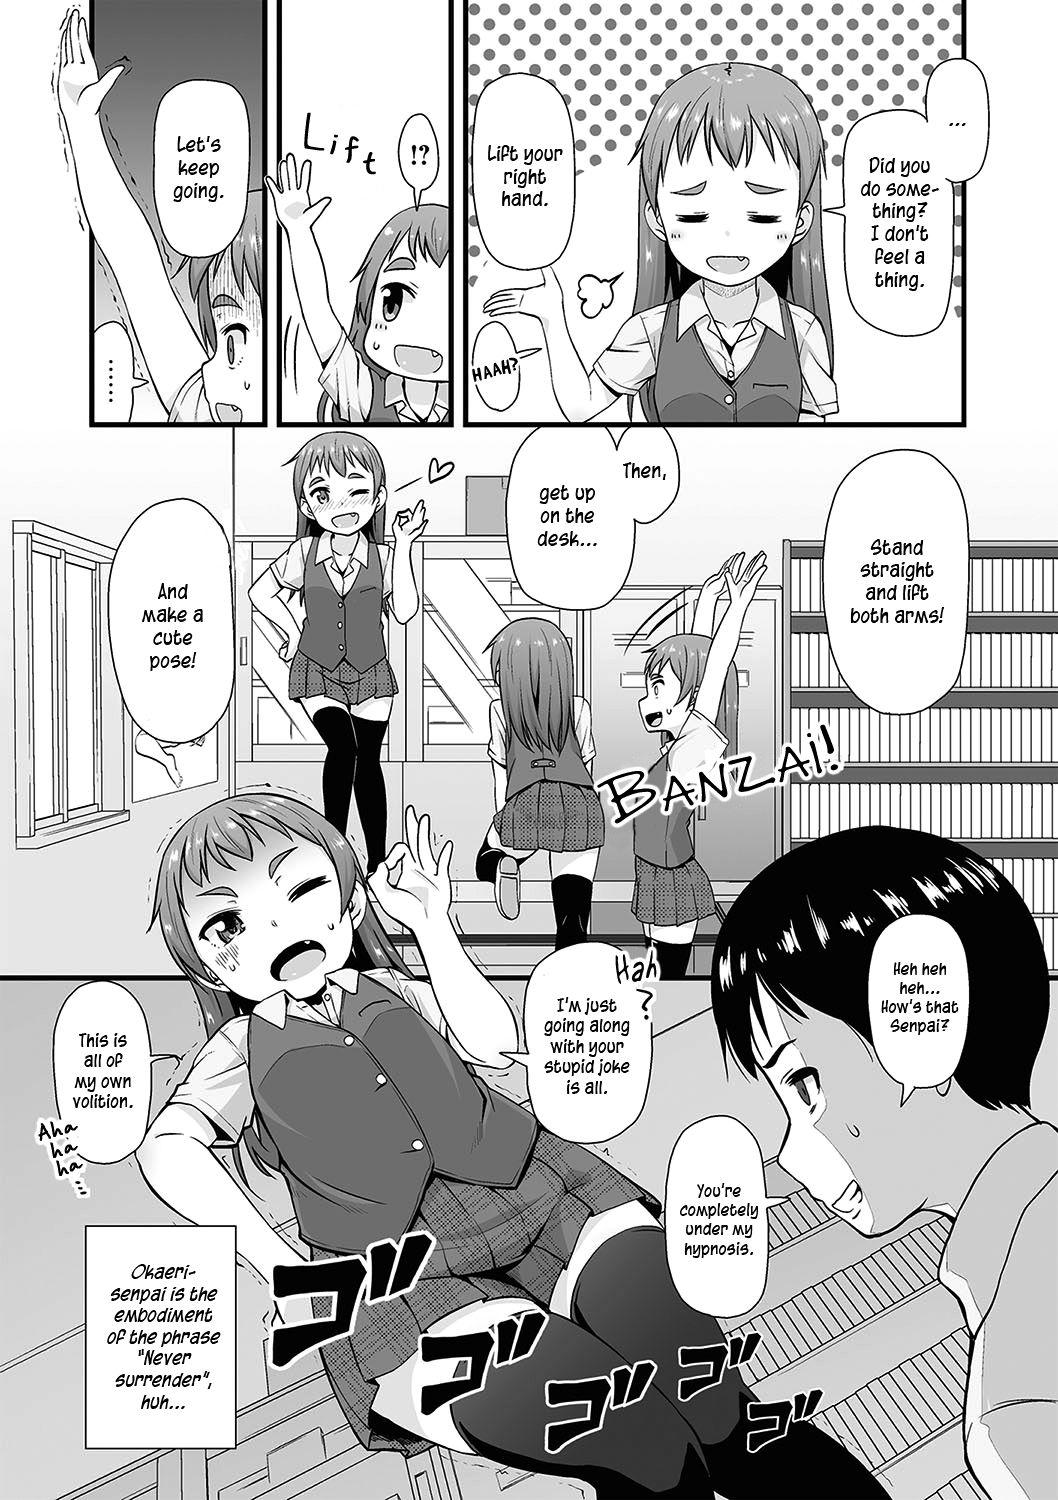 Manga Club Activity Log 4